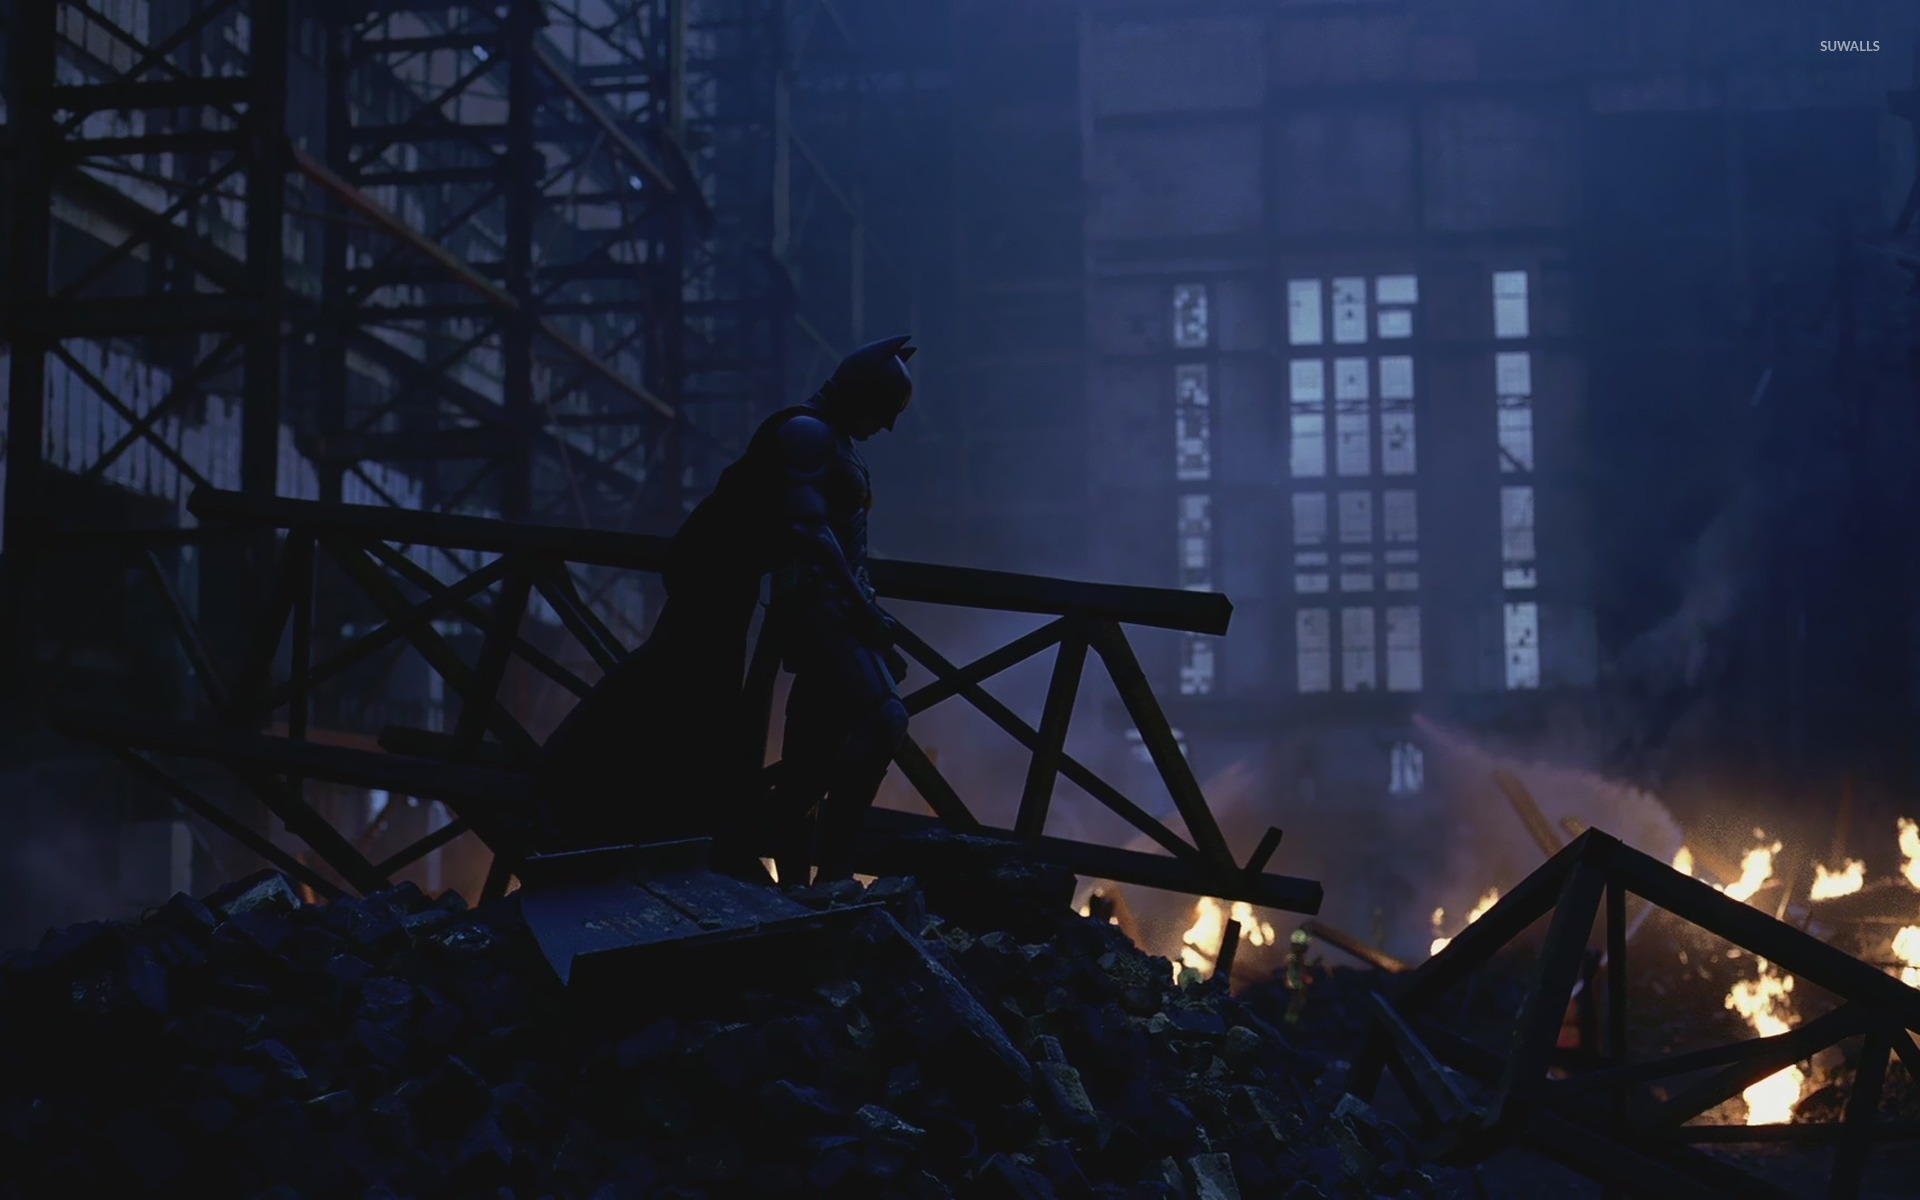 Batman - The Dark Knight Rises [6] wallpaper - Movie wallpapers - #14655